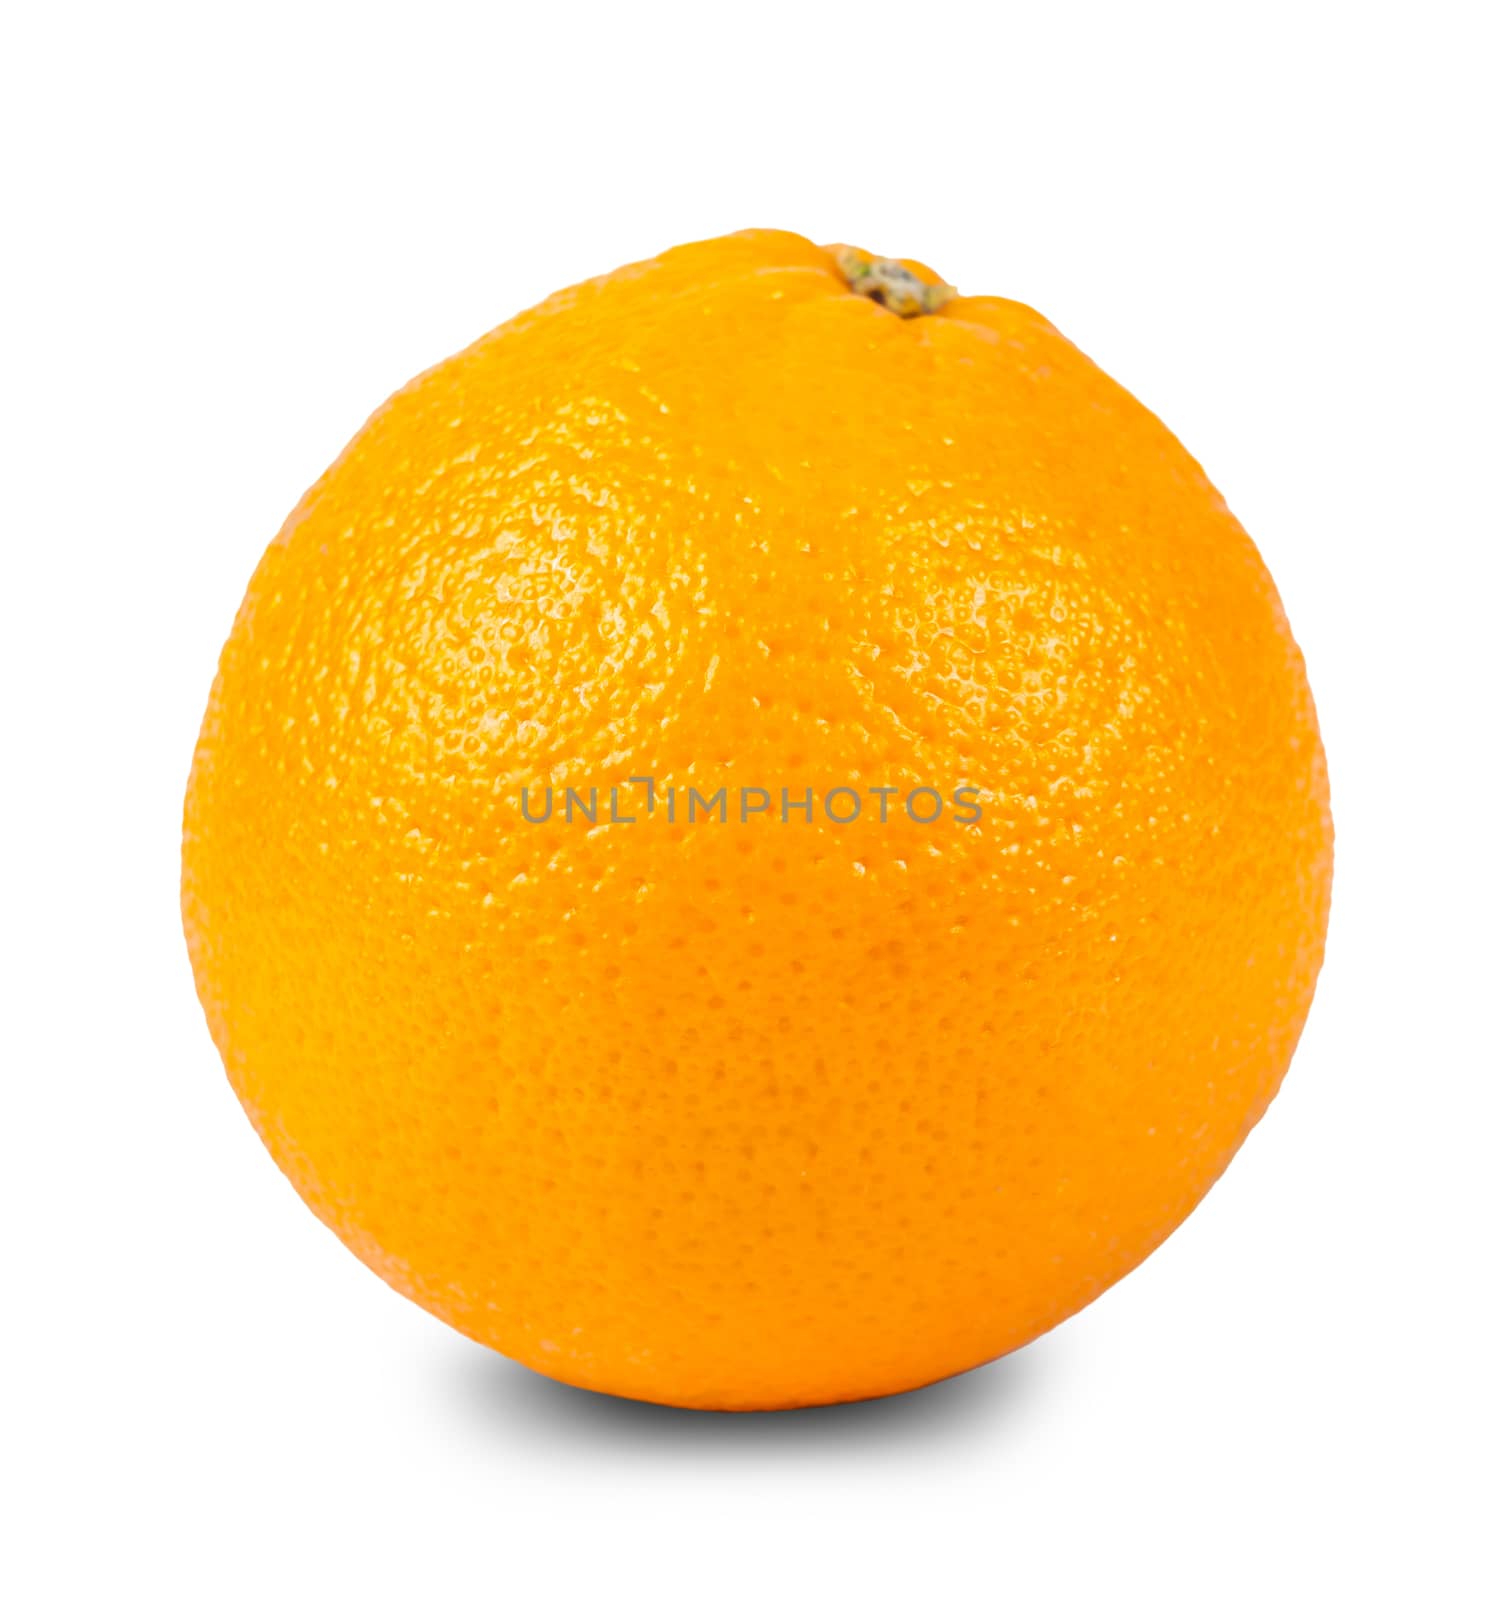 one orange closeup  by MegaArt